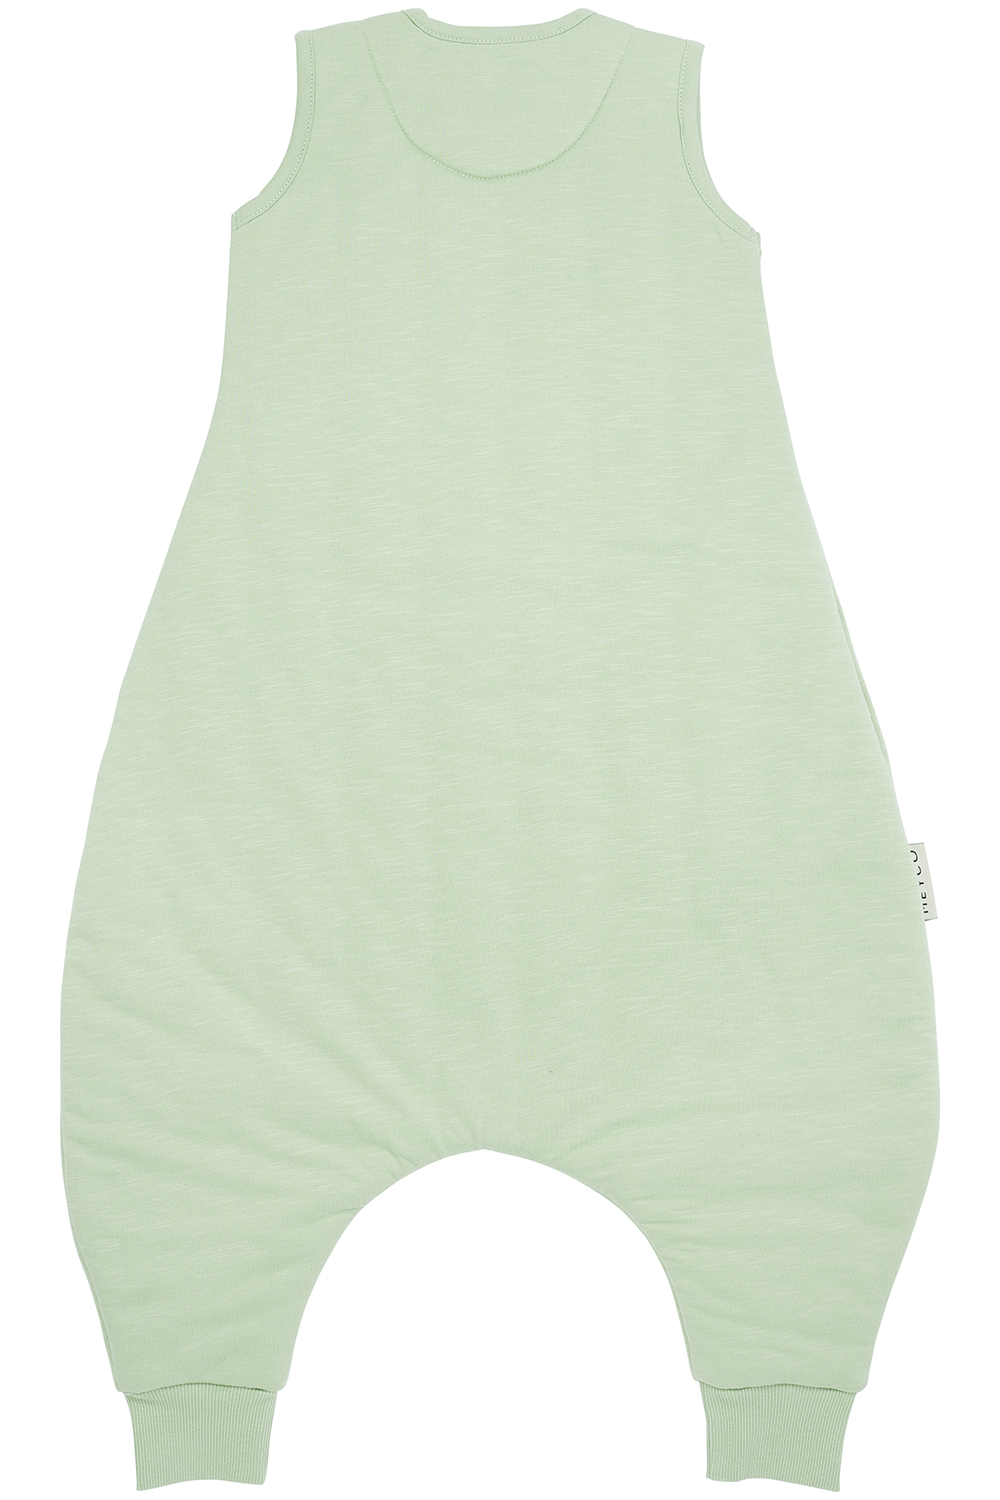 Baby winter slaapoverall jumper Slub - soft green - 92cm